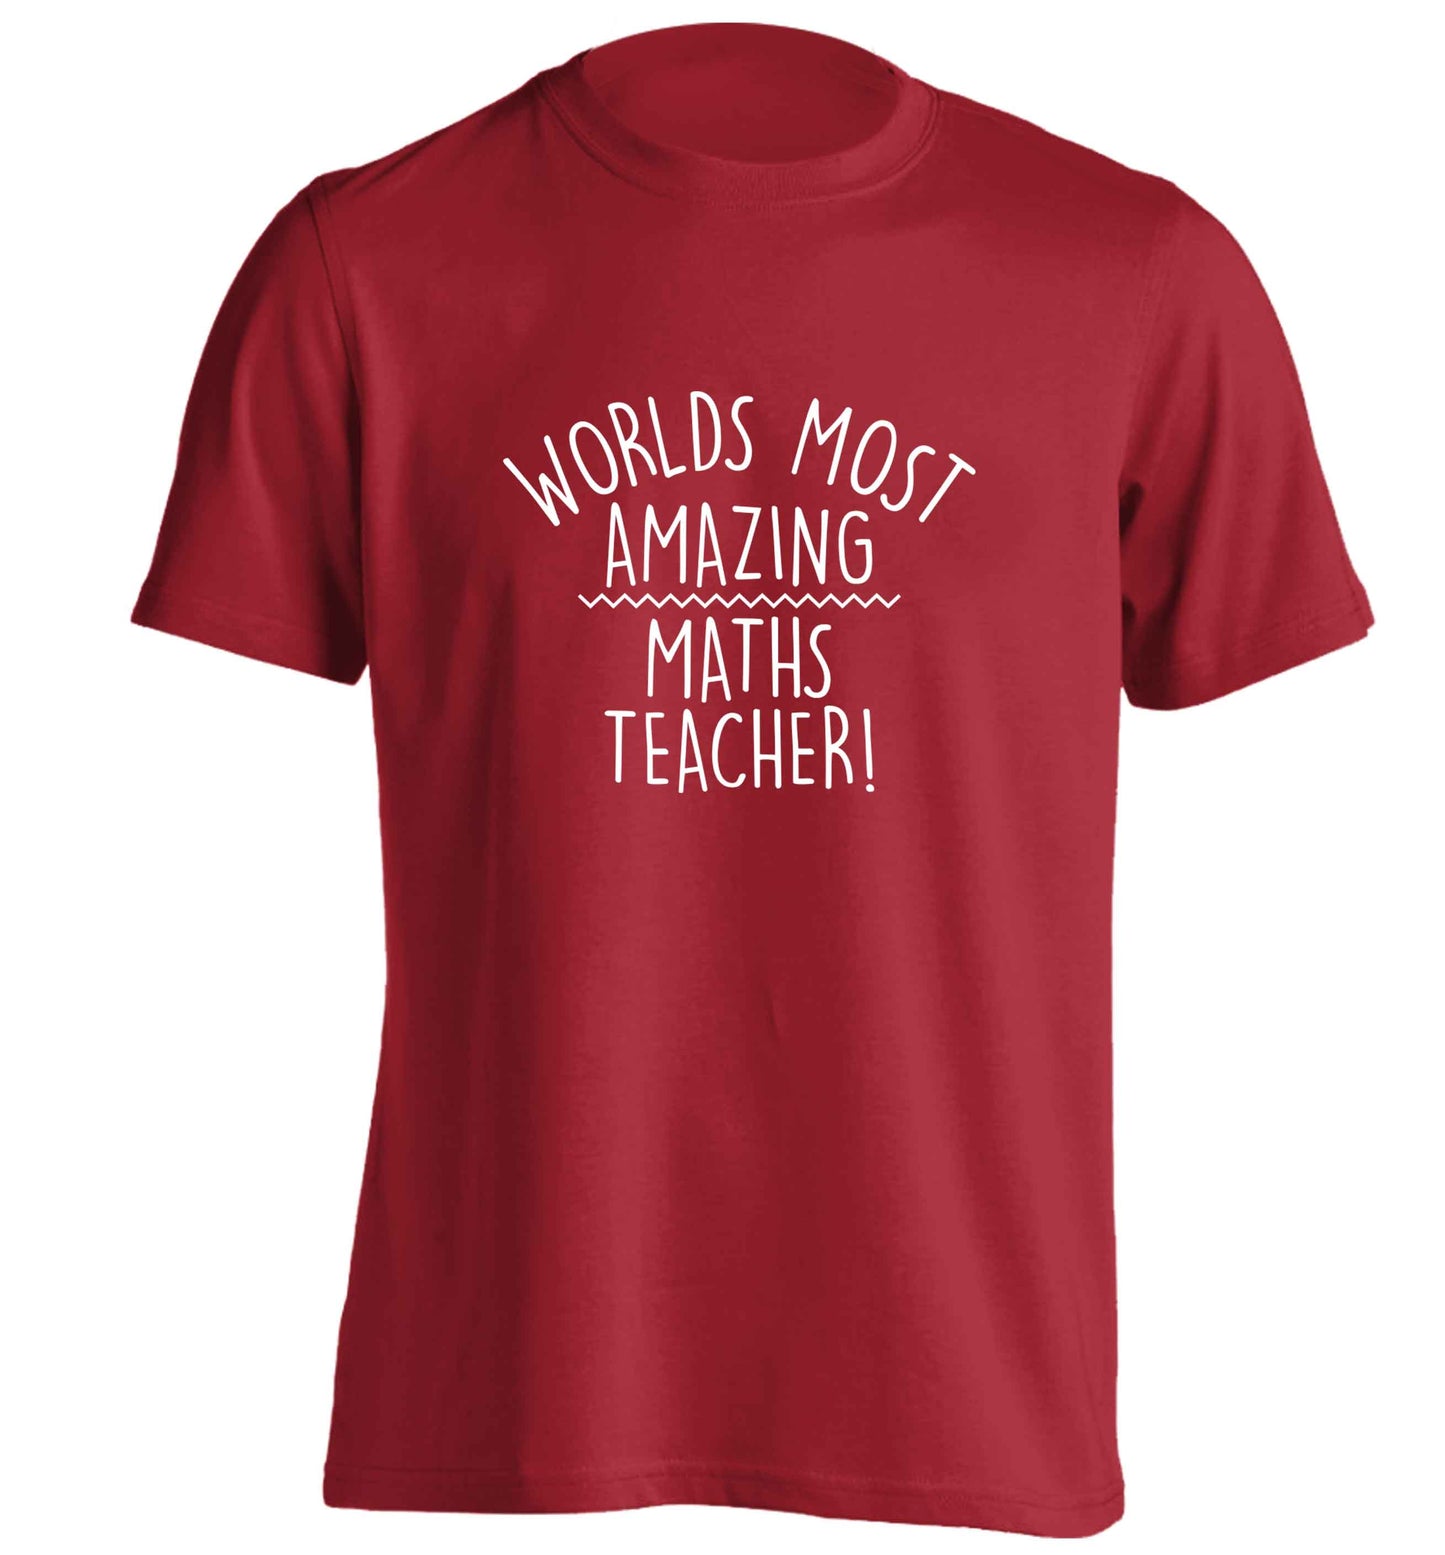 Worlds most amazing maths teacher adults unisex red Tshirt 2XL